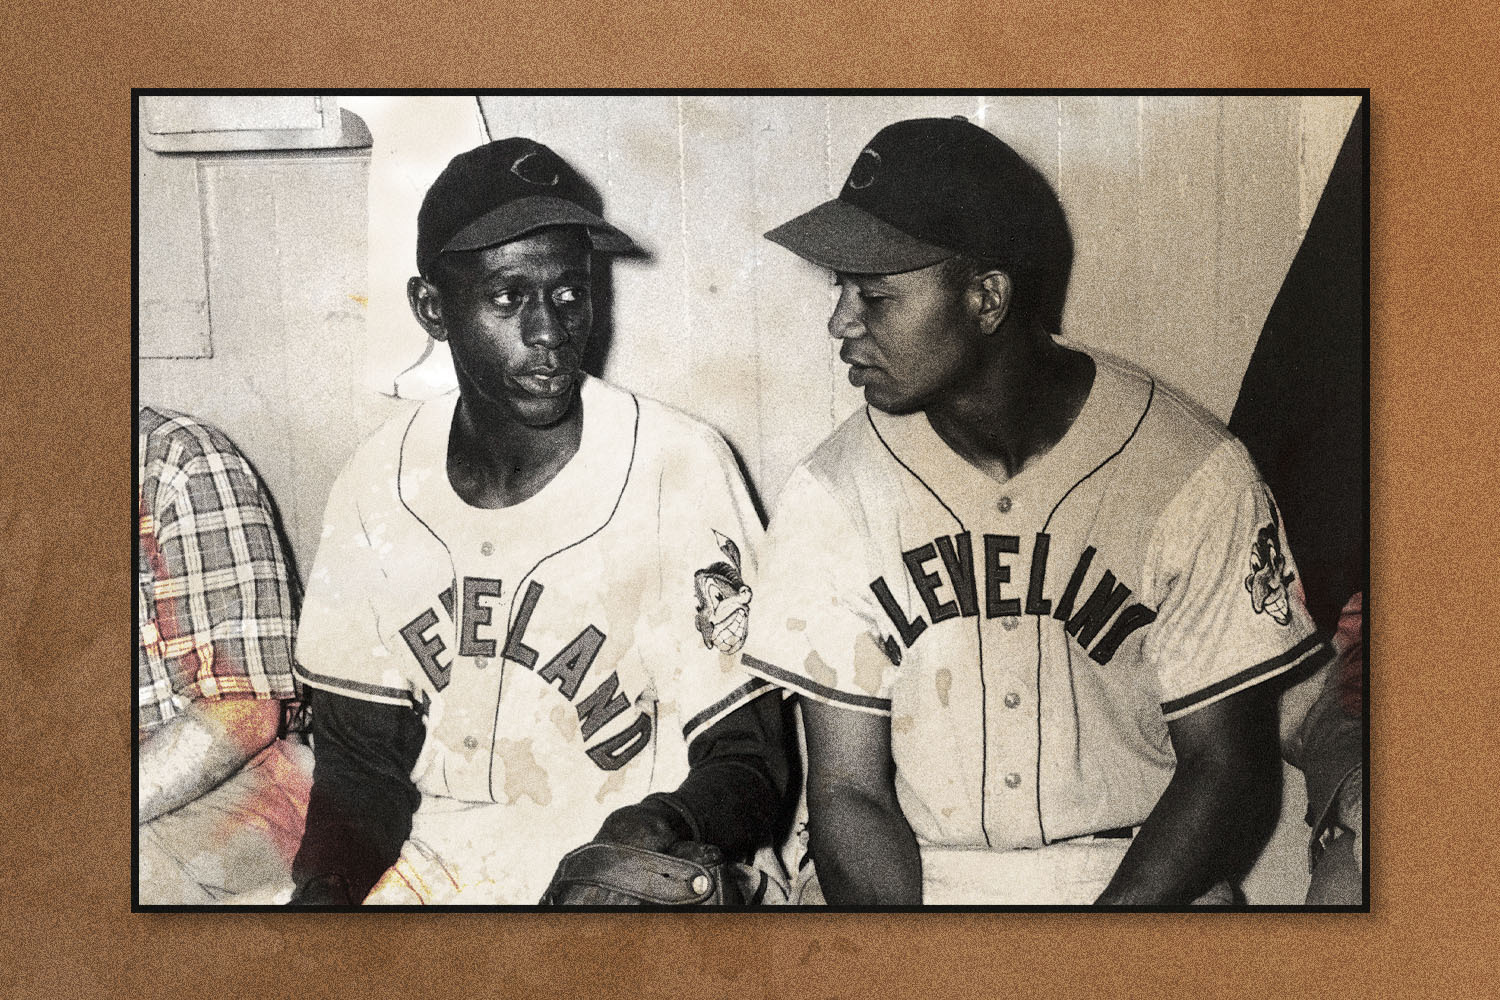 The Story of MLB's Integration Goes Way Beyond Jackie Robinson - InsideHook